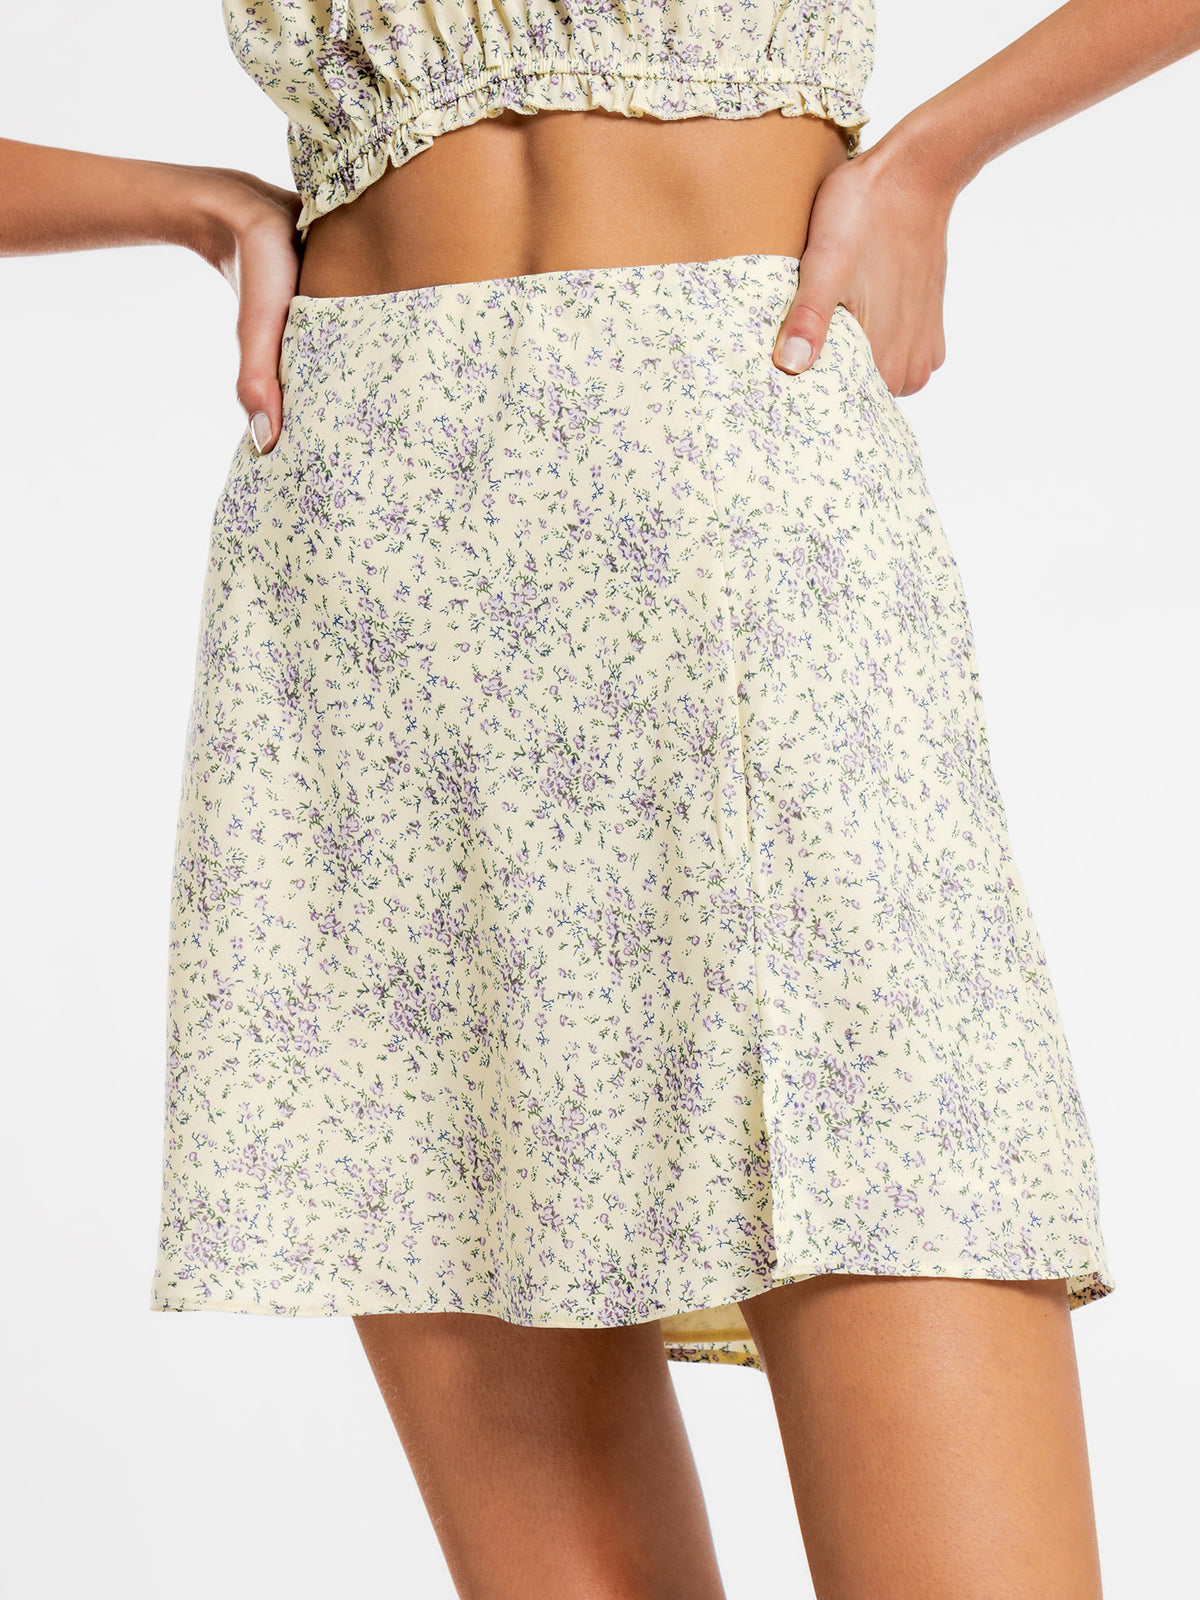 Annika Mini Skirt in Ditsy Floral